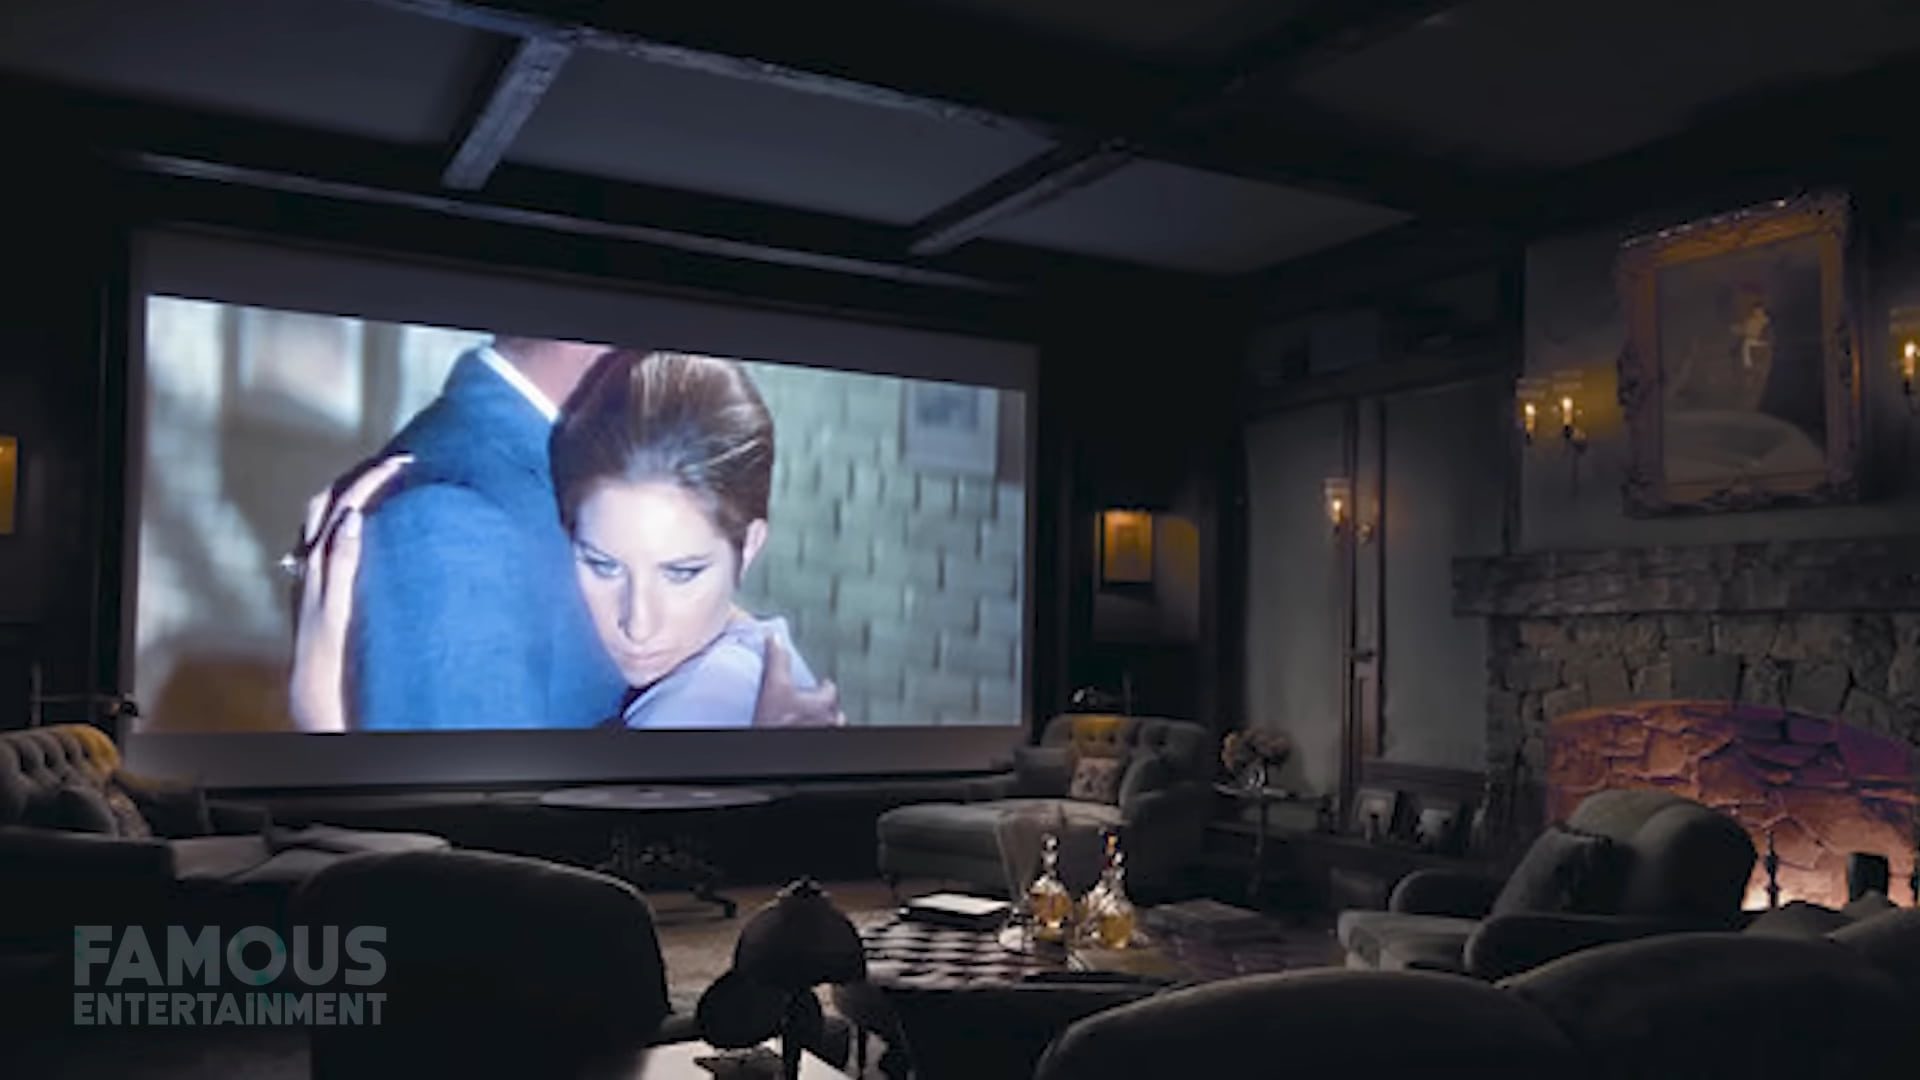 Barbra Streisand’s screening room